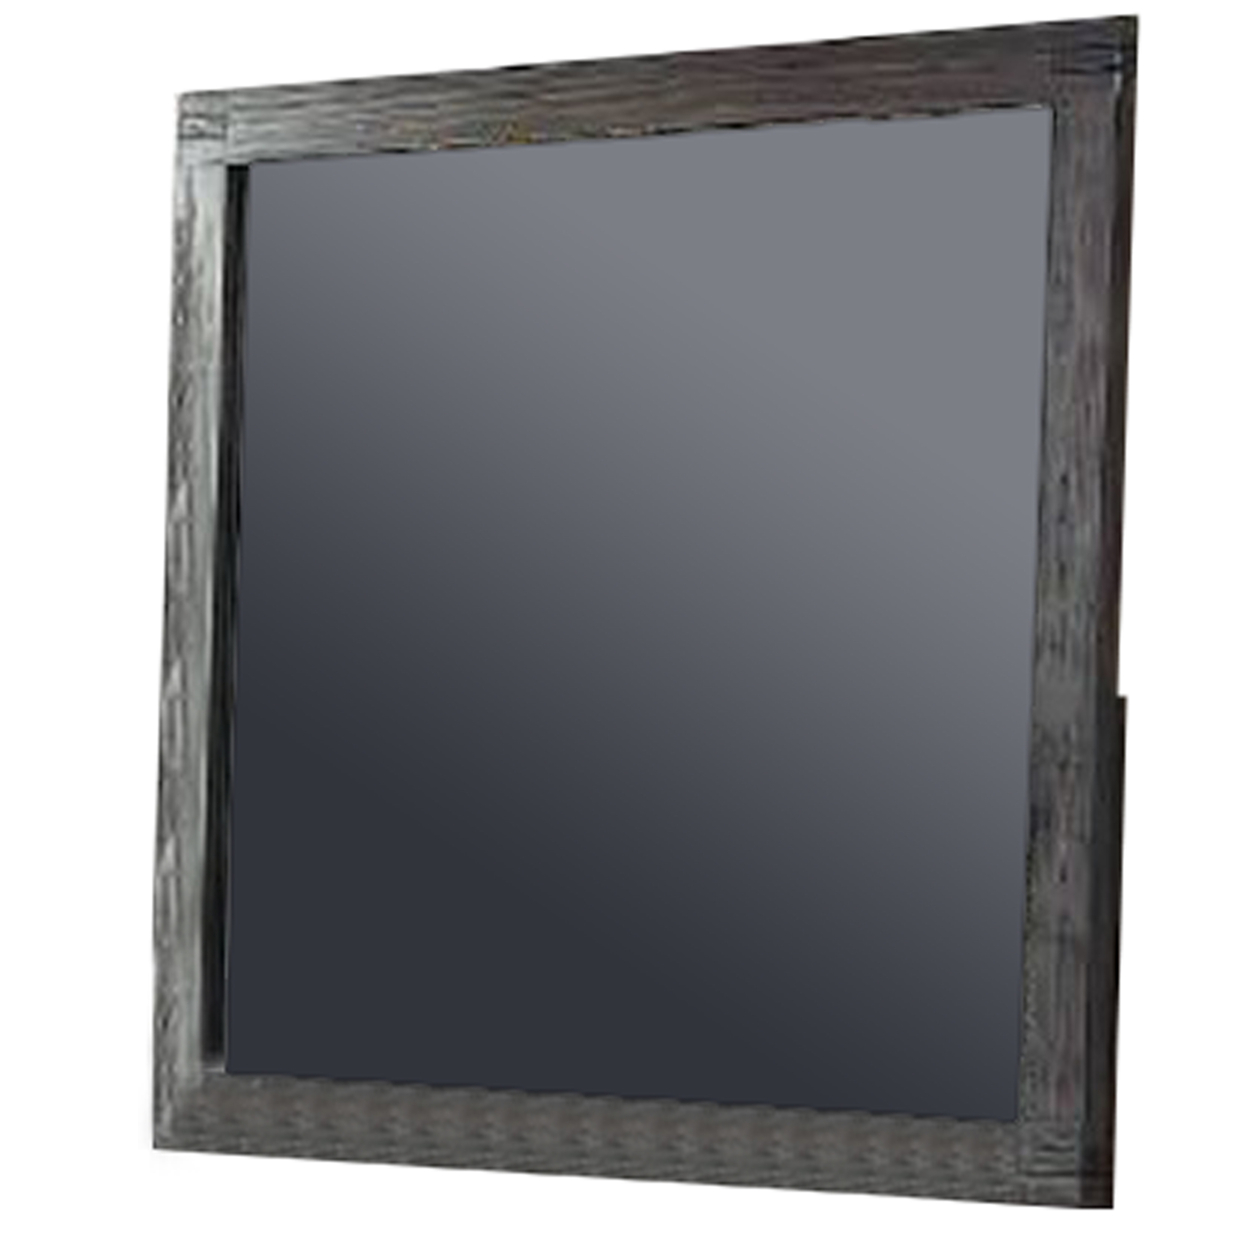 Wall Mirror With Rectangular Frame And Natural Wood Grain Details, Dark Brown- Saltoro Sherpi